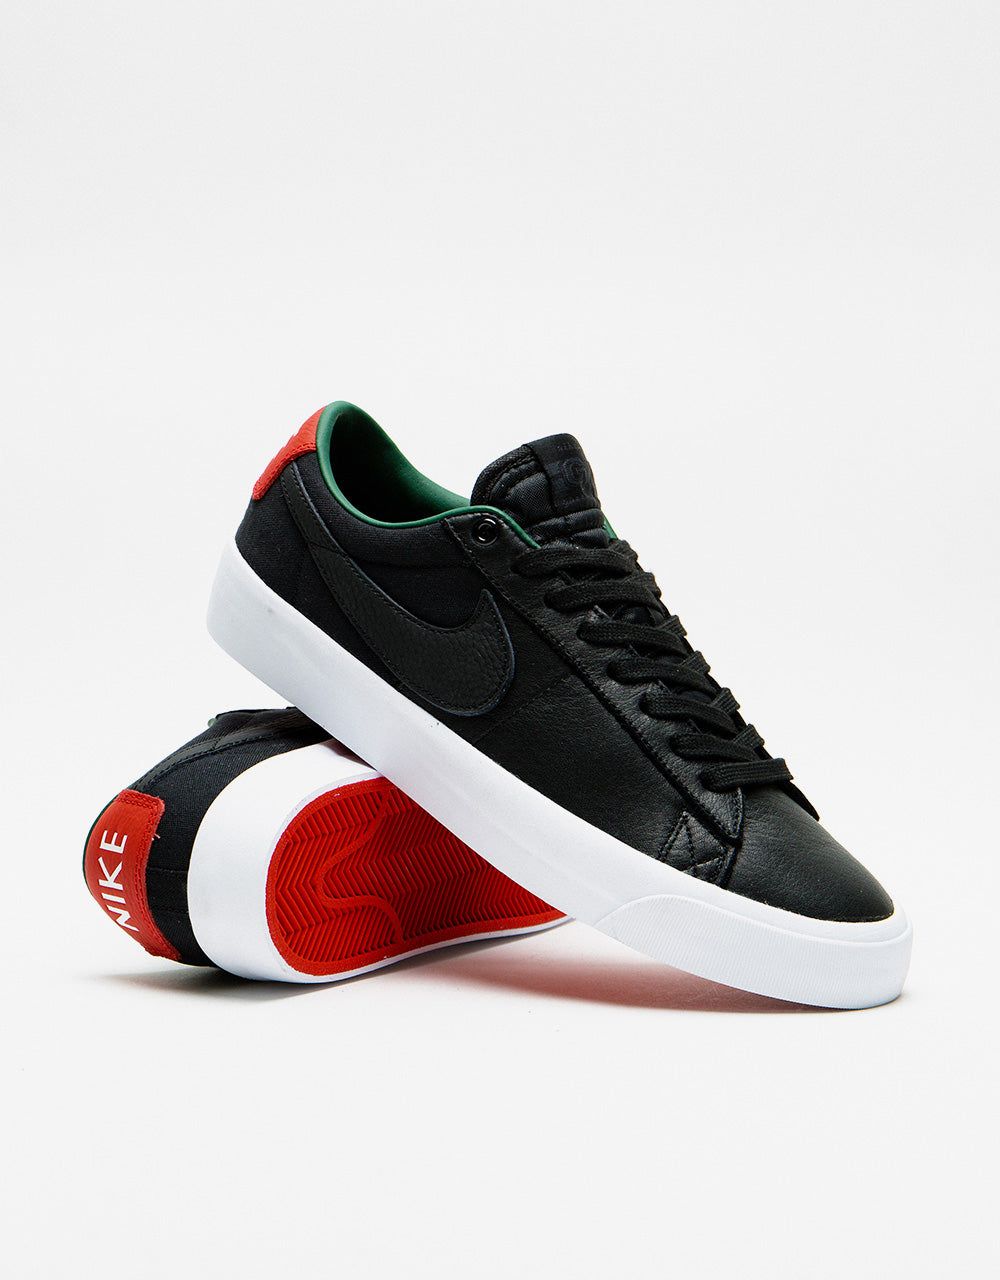 Nike SB Zoom Blazer Low Pro GT Premium Skate Shoes - Black/Black-Varsity Red-Fir